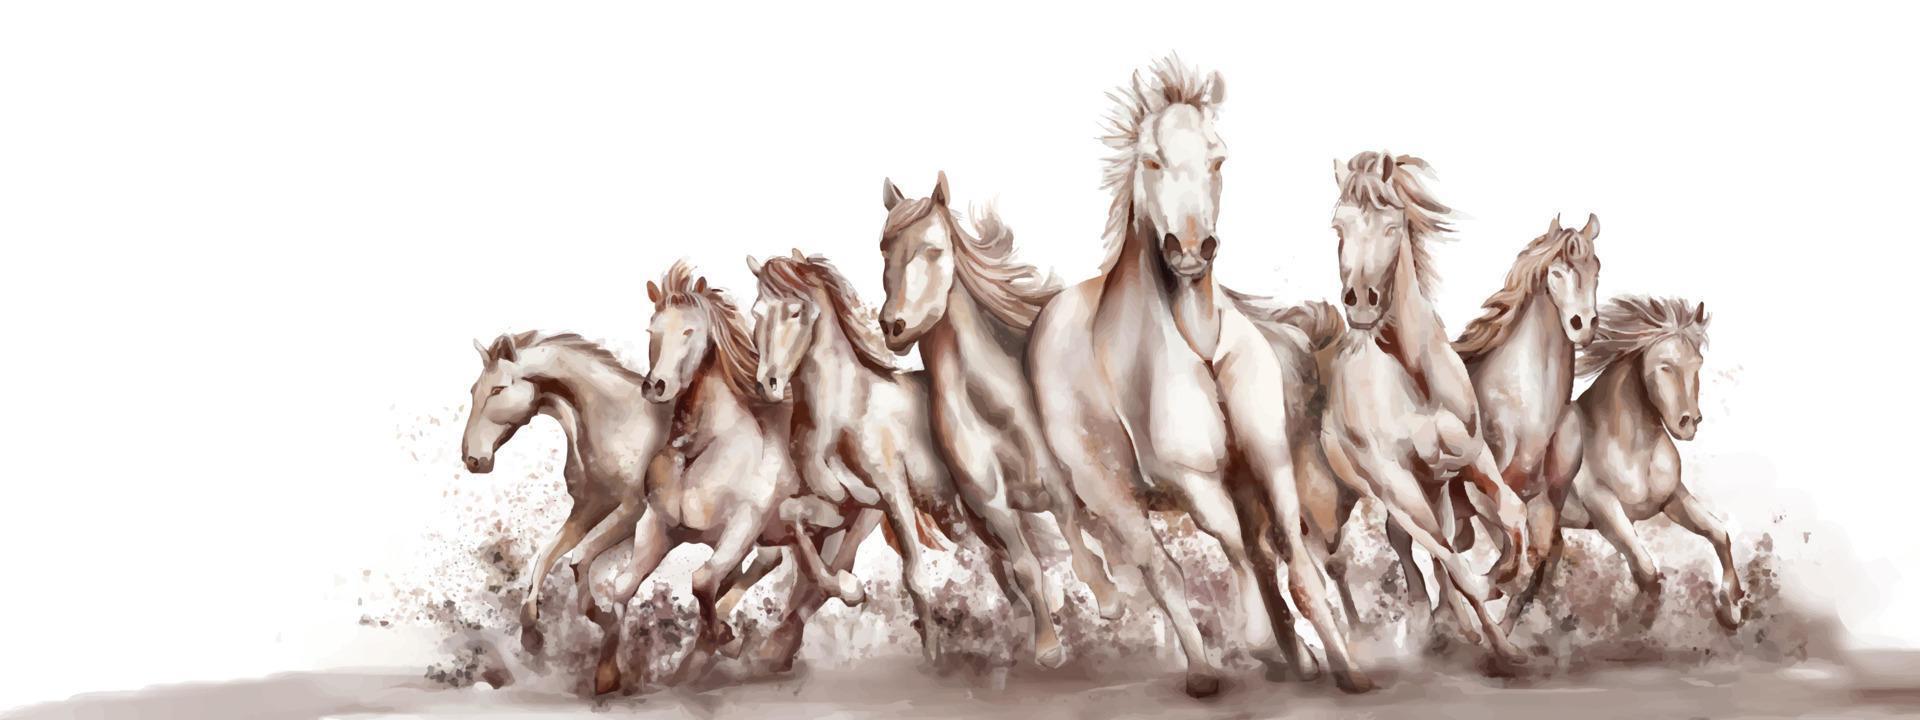 8 rennende paarden zwart-wit aquarel stijl op witte achtergrond vector